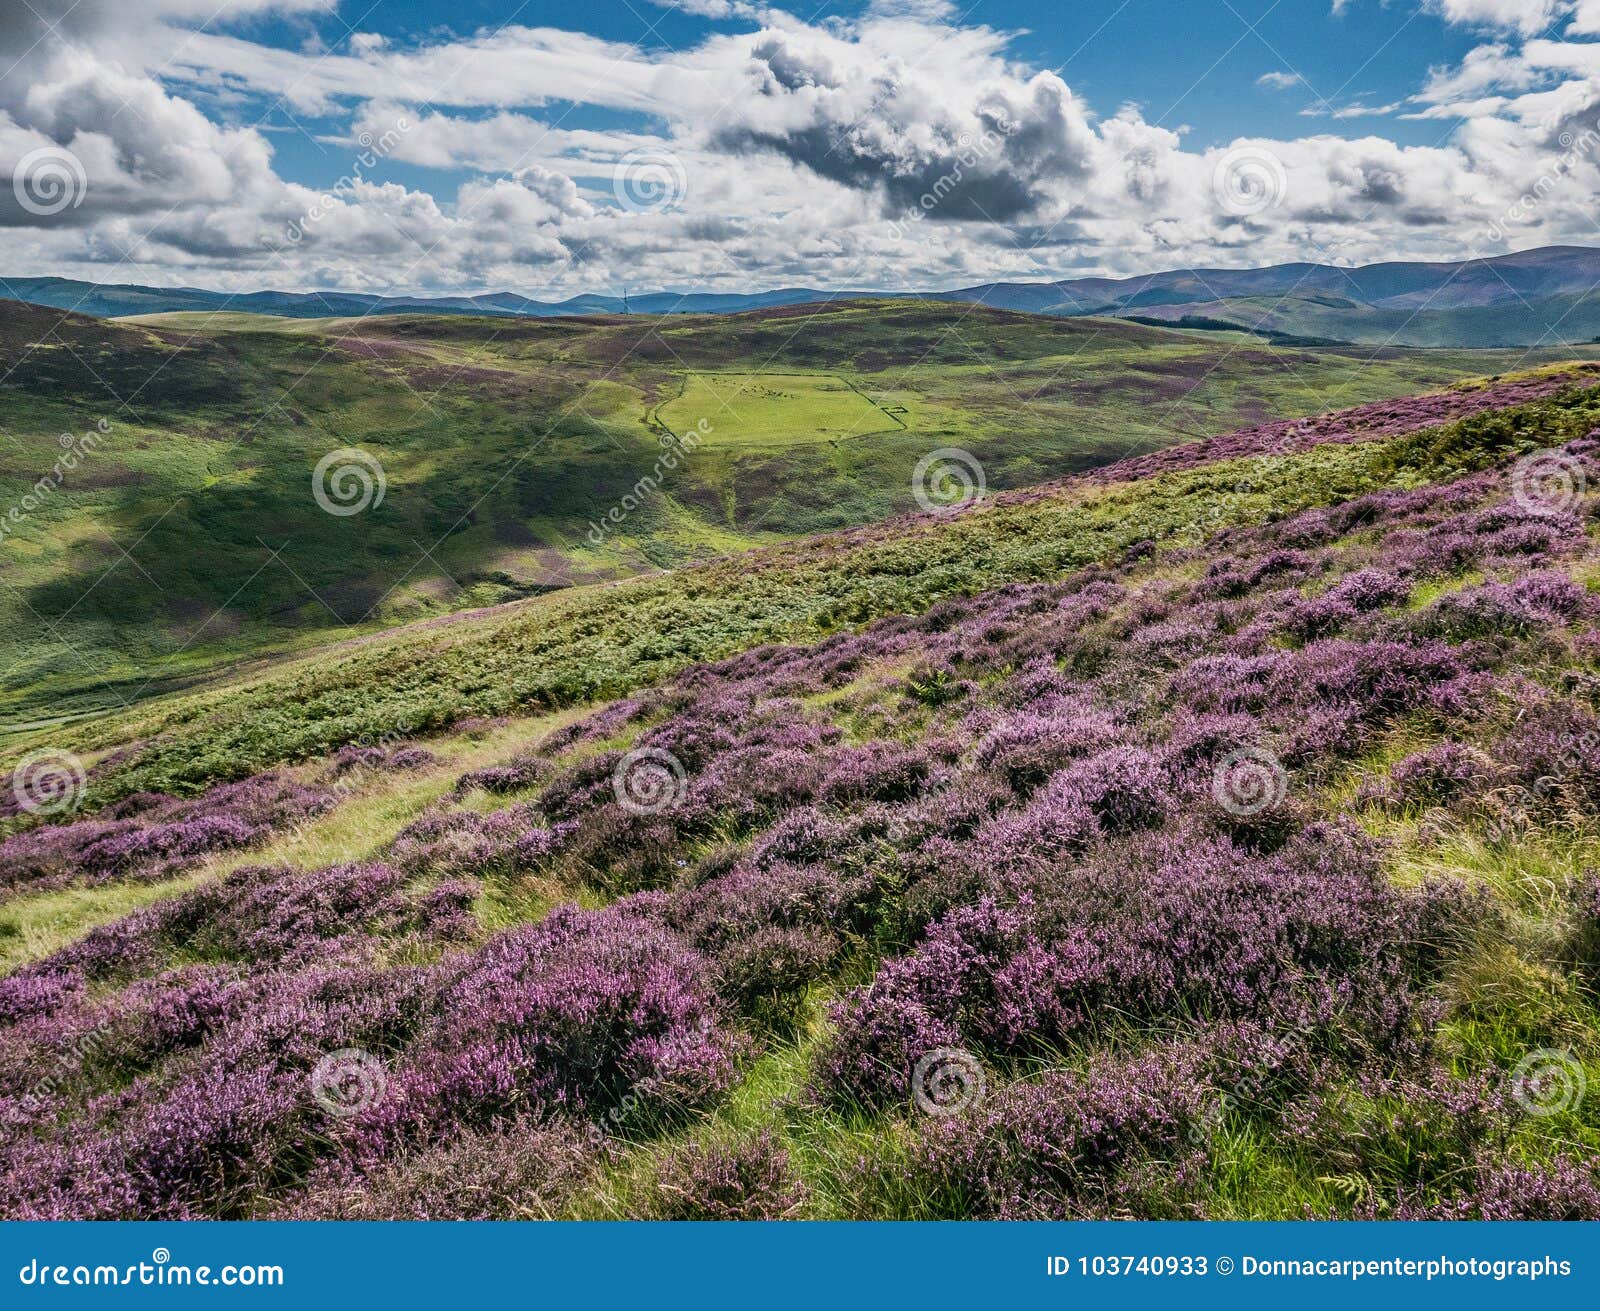 purple heather covered hillside, black meldon hill